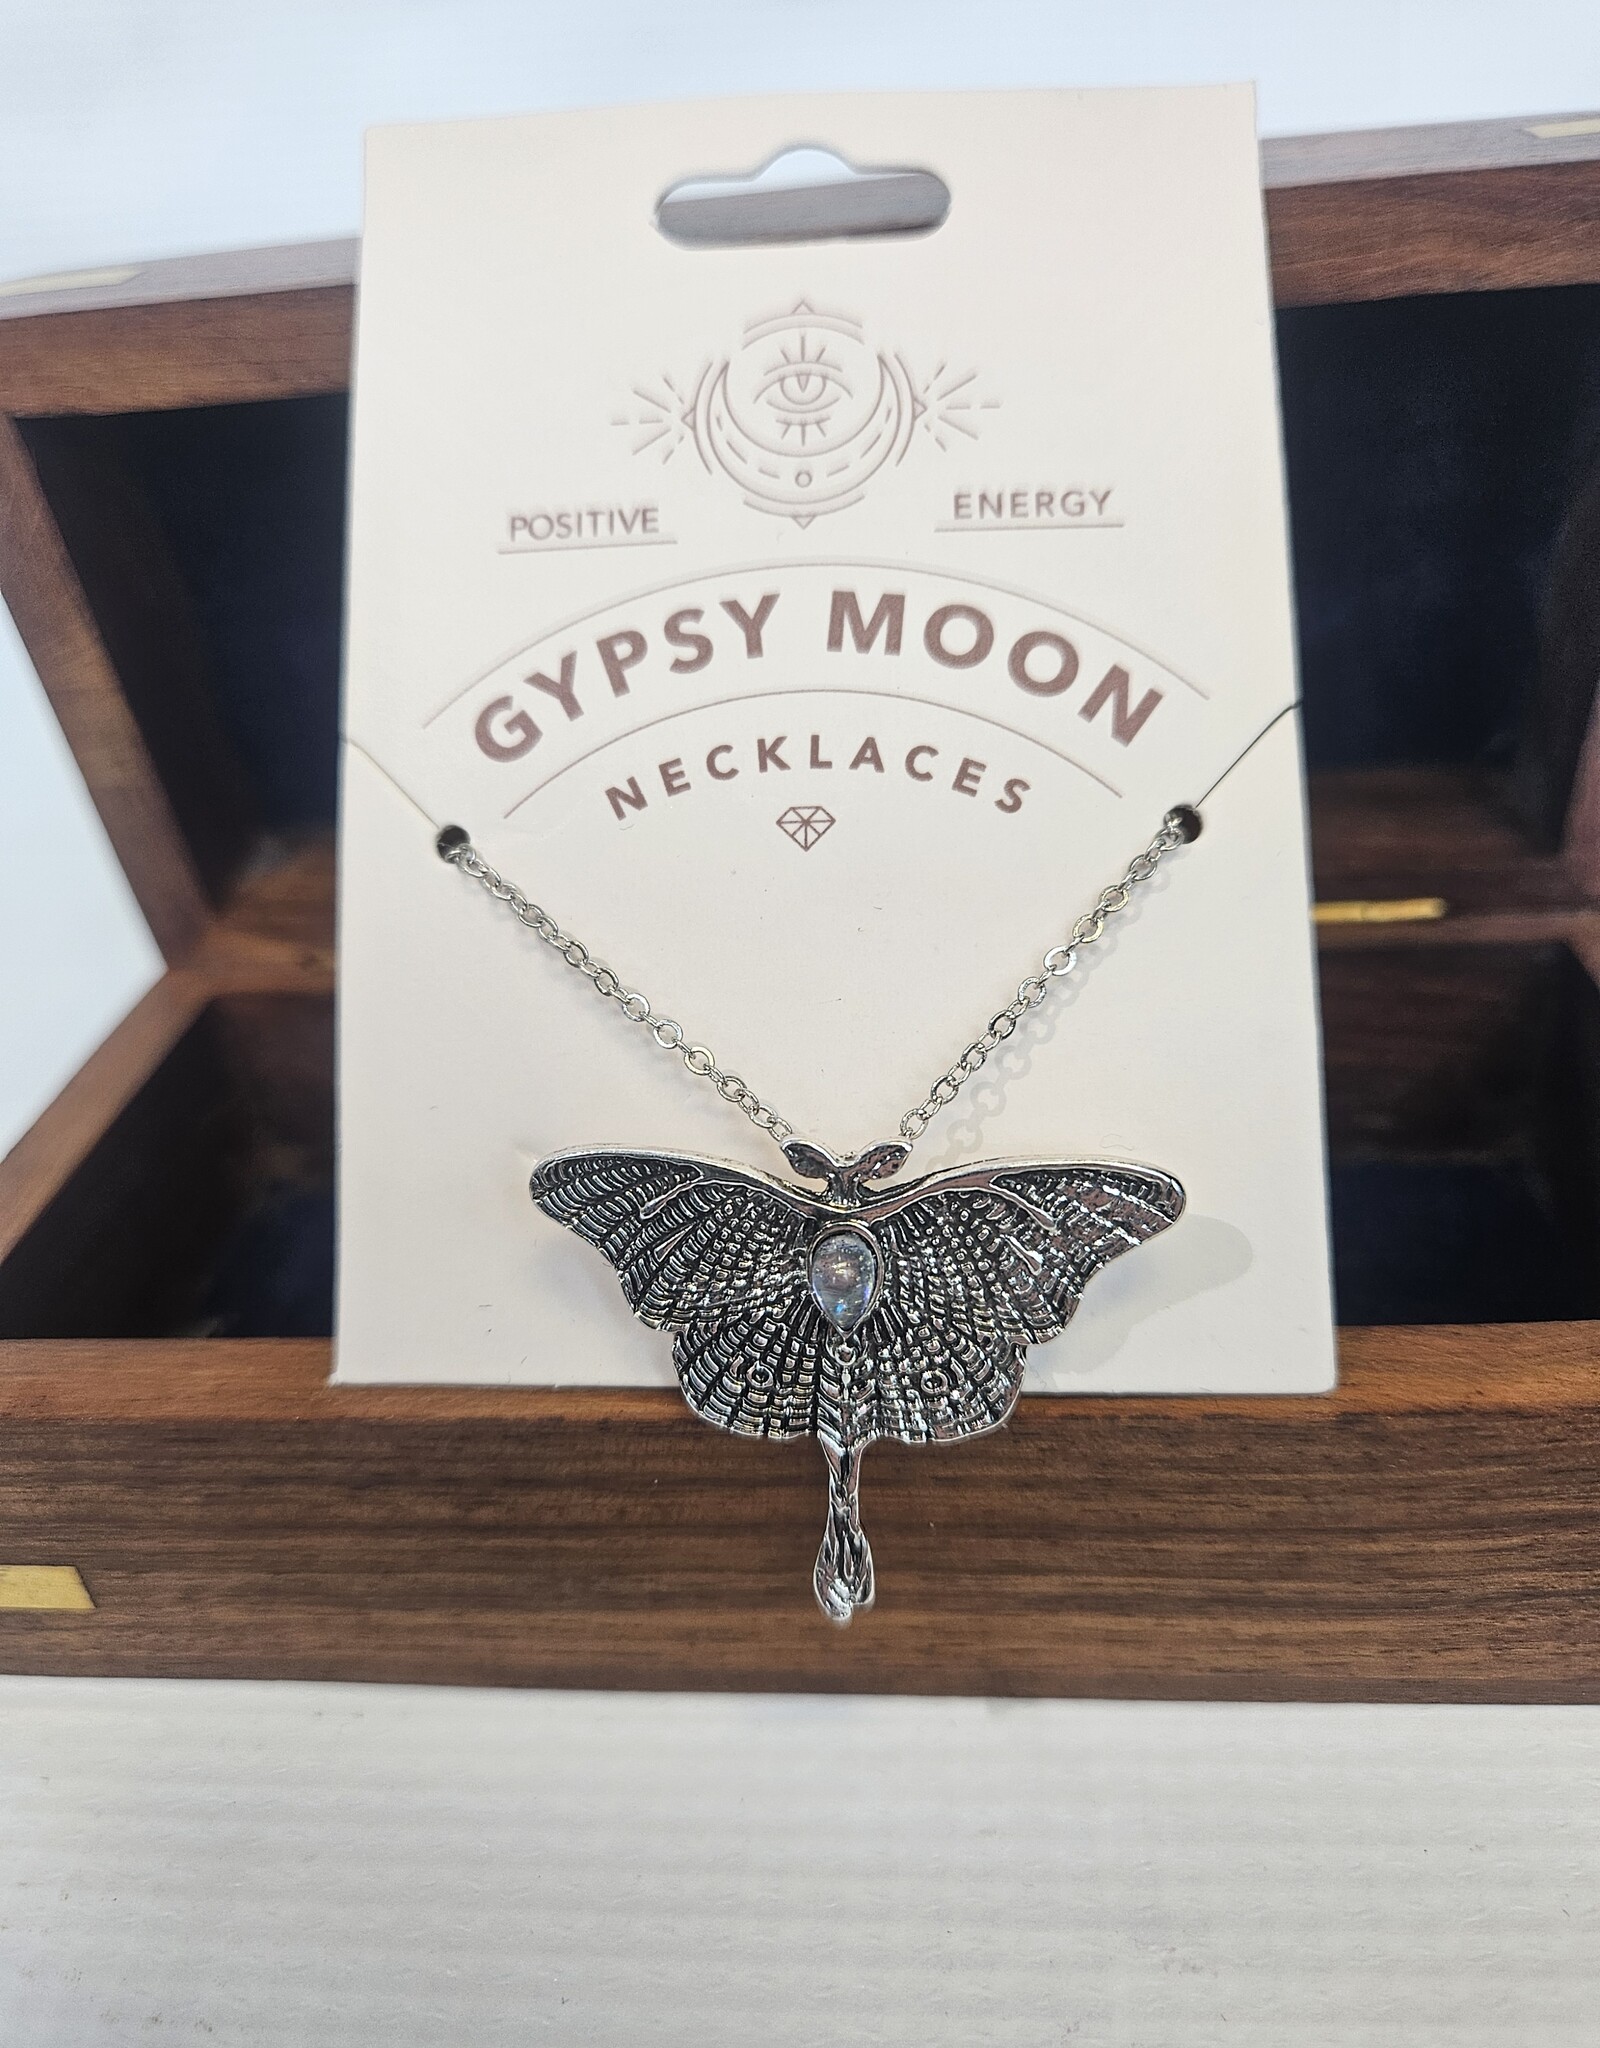 Positive Energy Gypsy Moon Silver Necklace